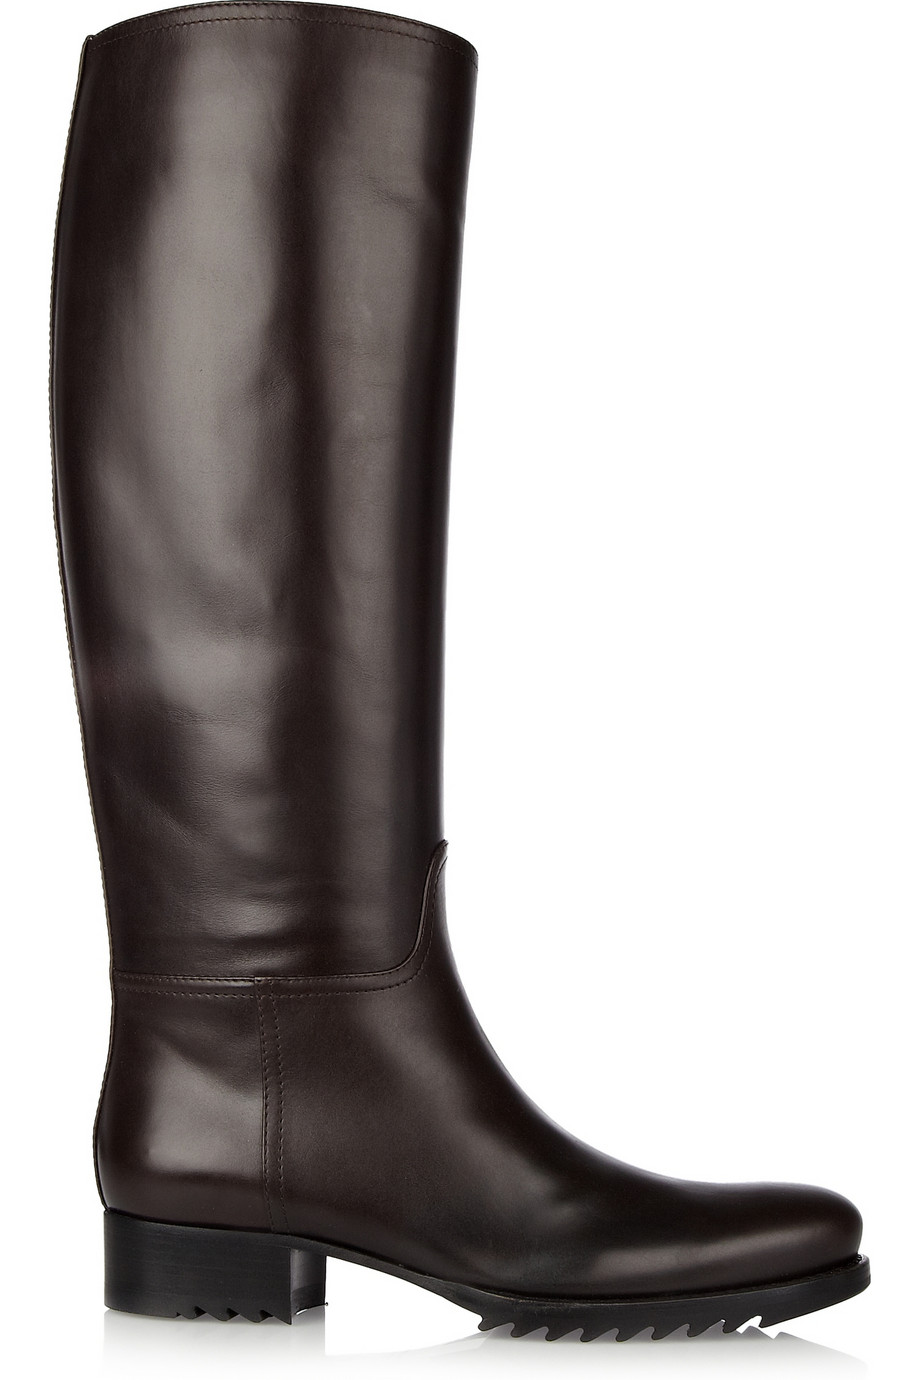 Lyst - Bottega veneta Leather Knee Boots in Brown